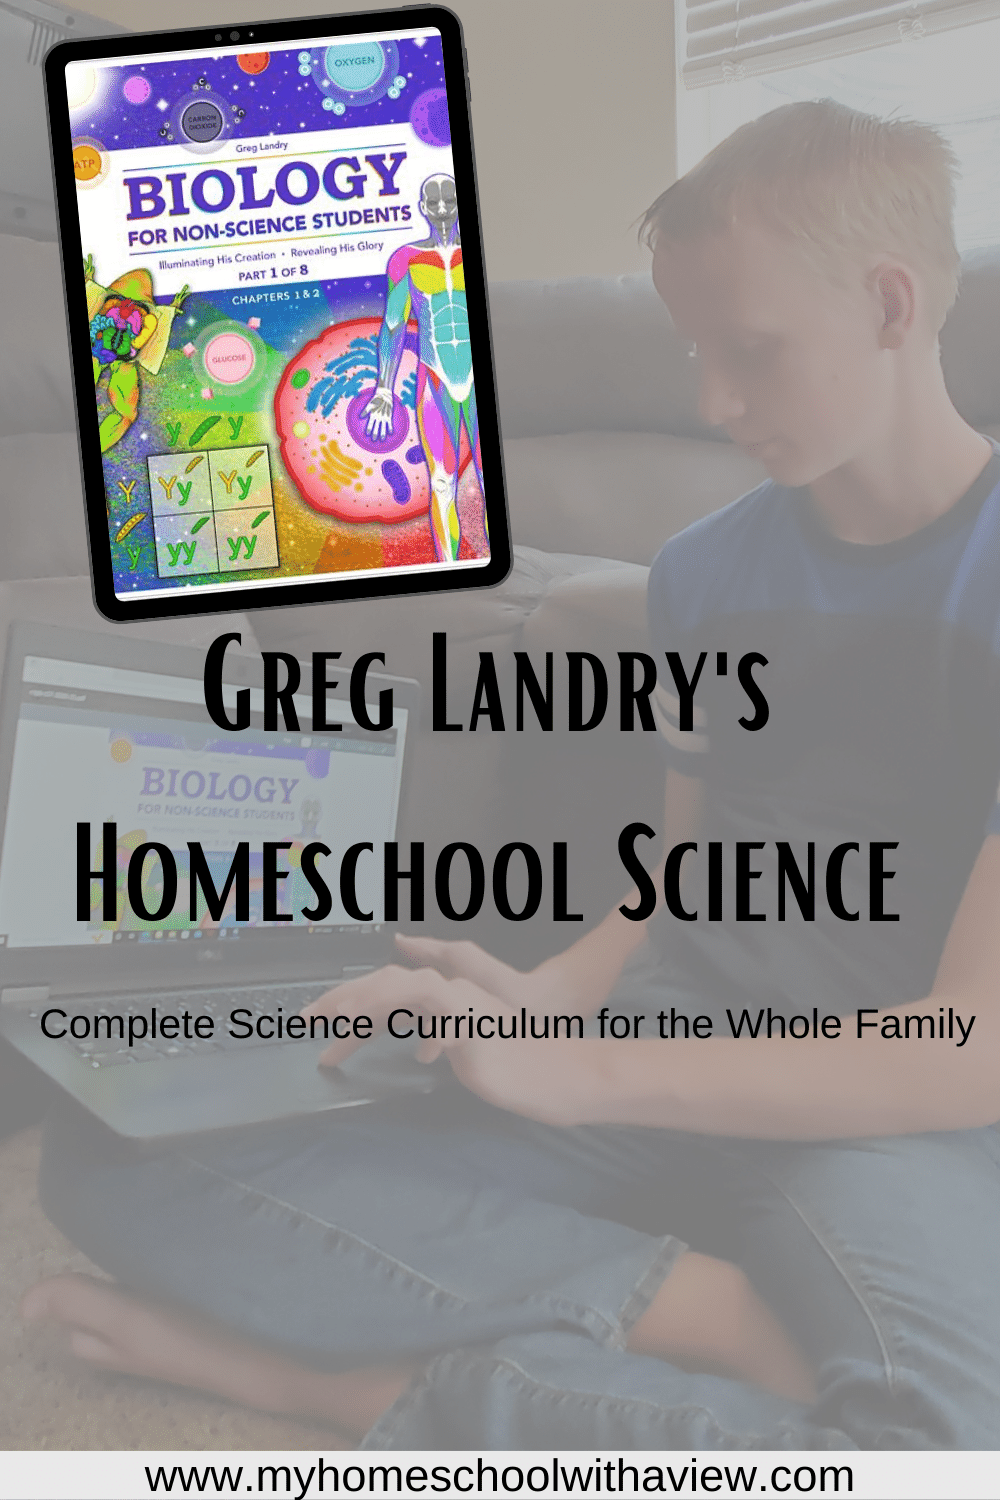 Visit Greg Landry's Homeschool Science